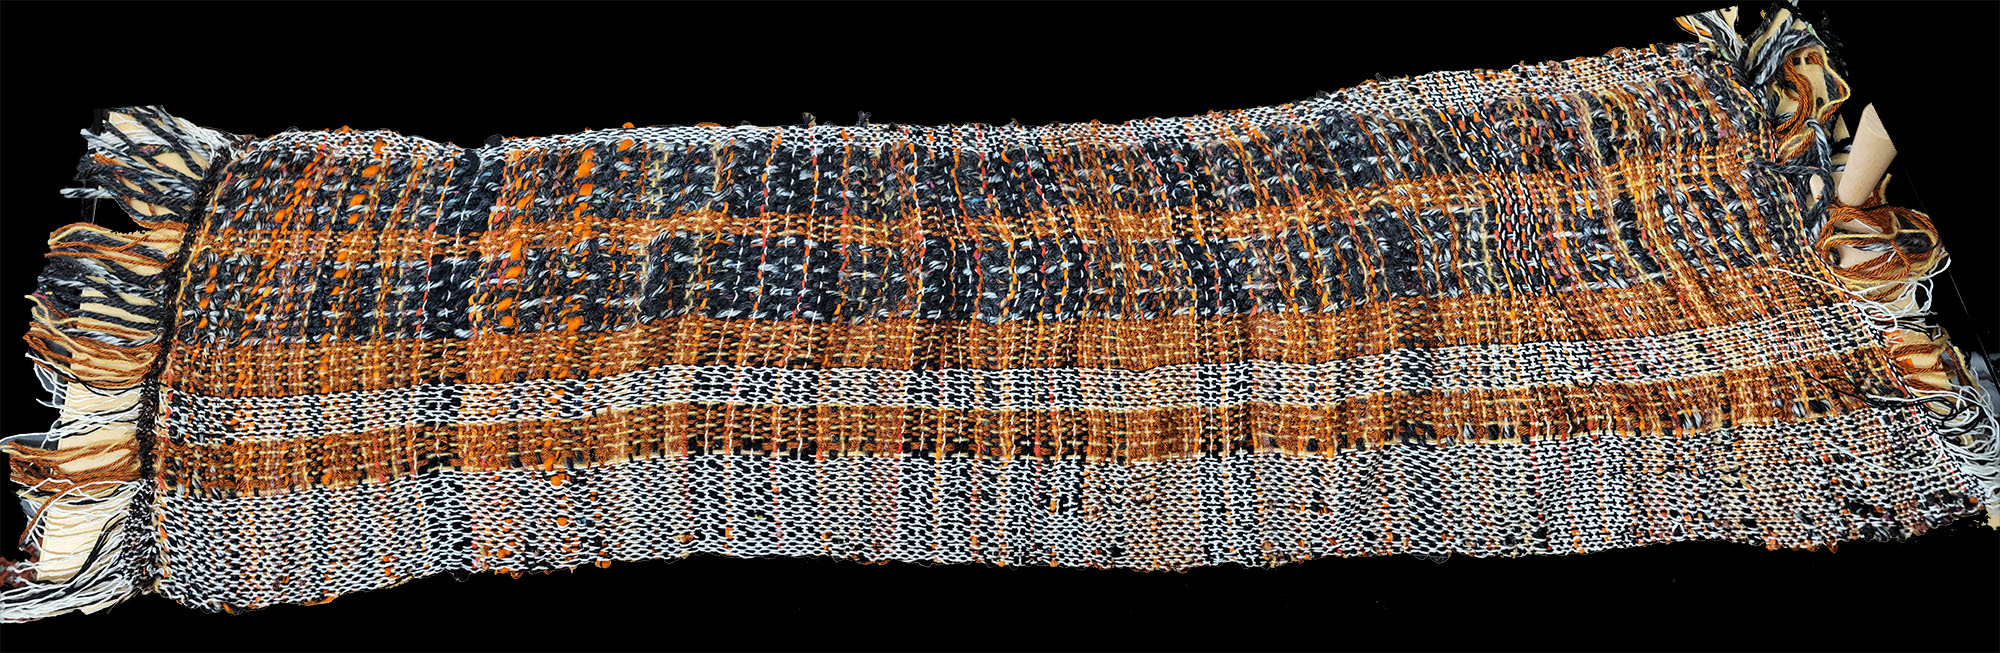 Panorama photo of the weaving